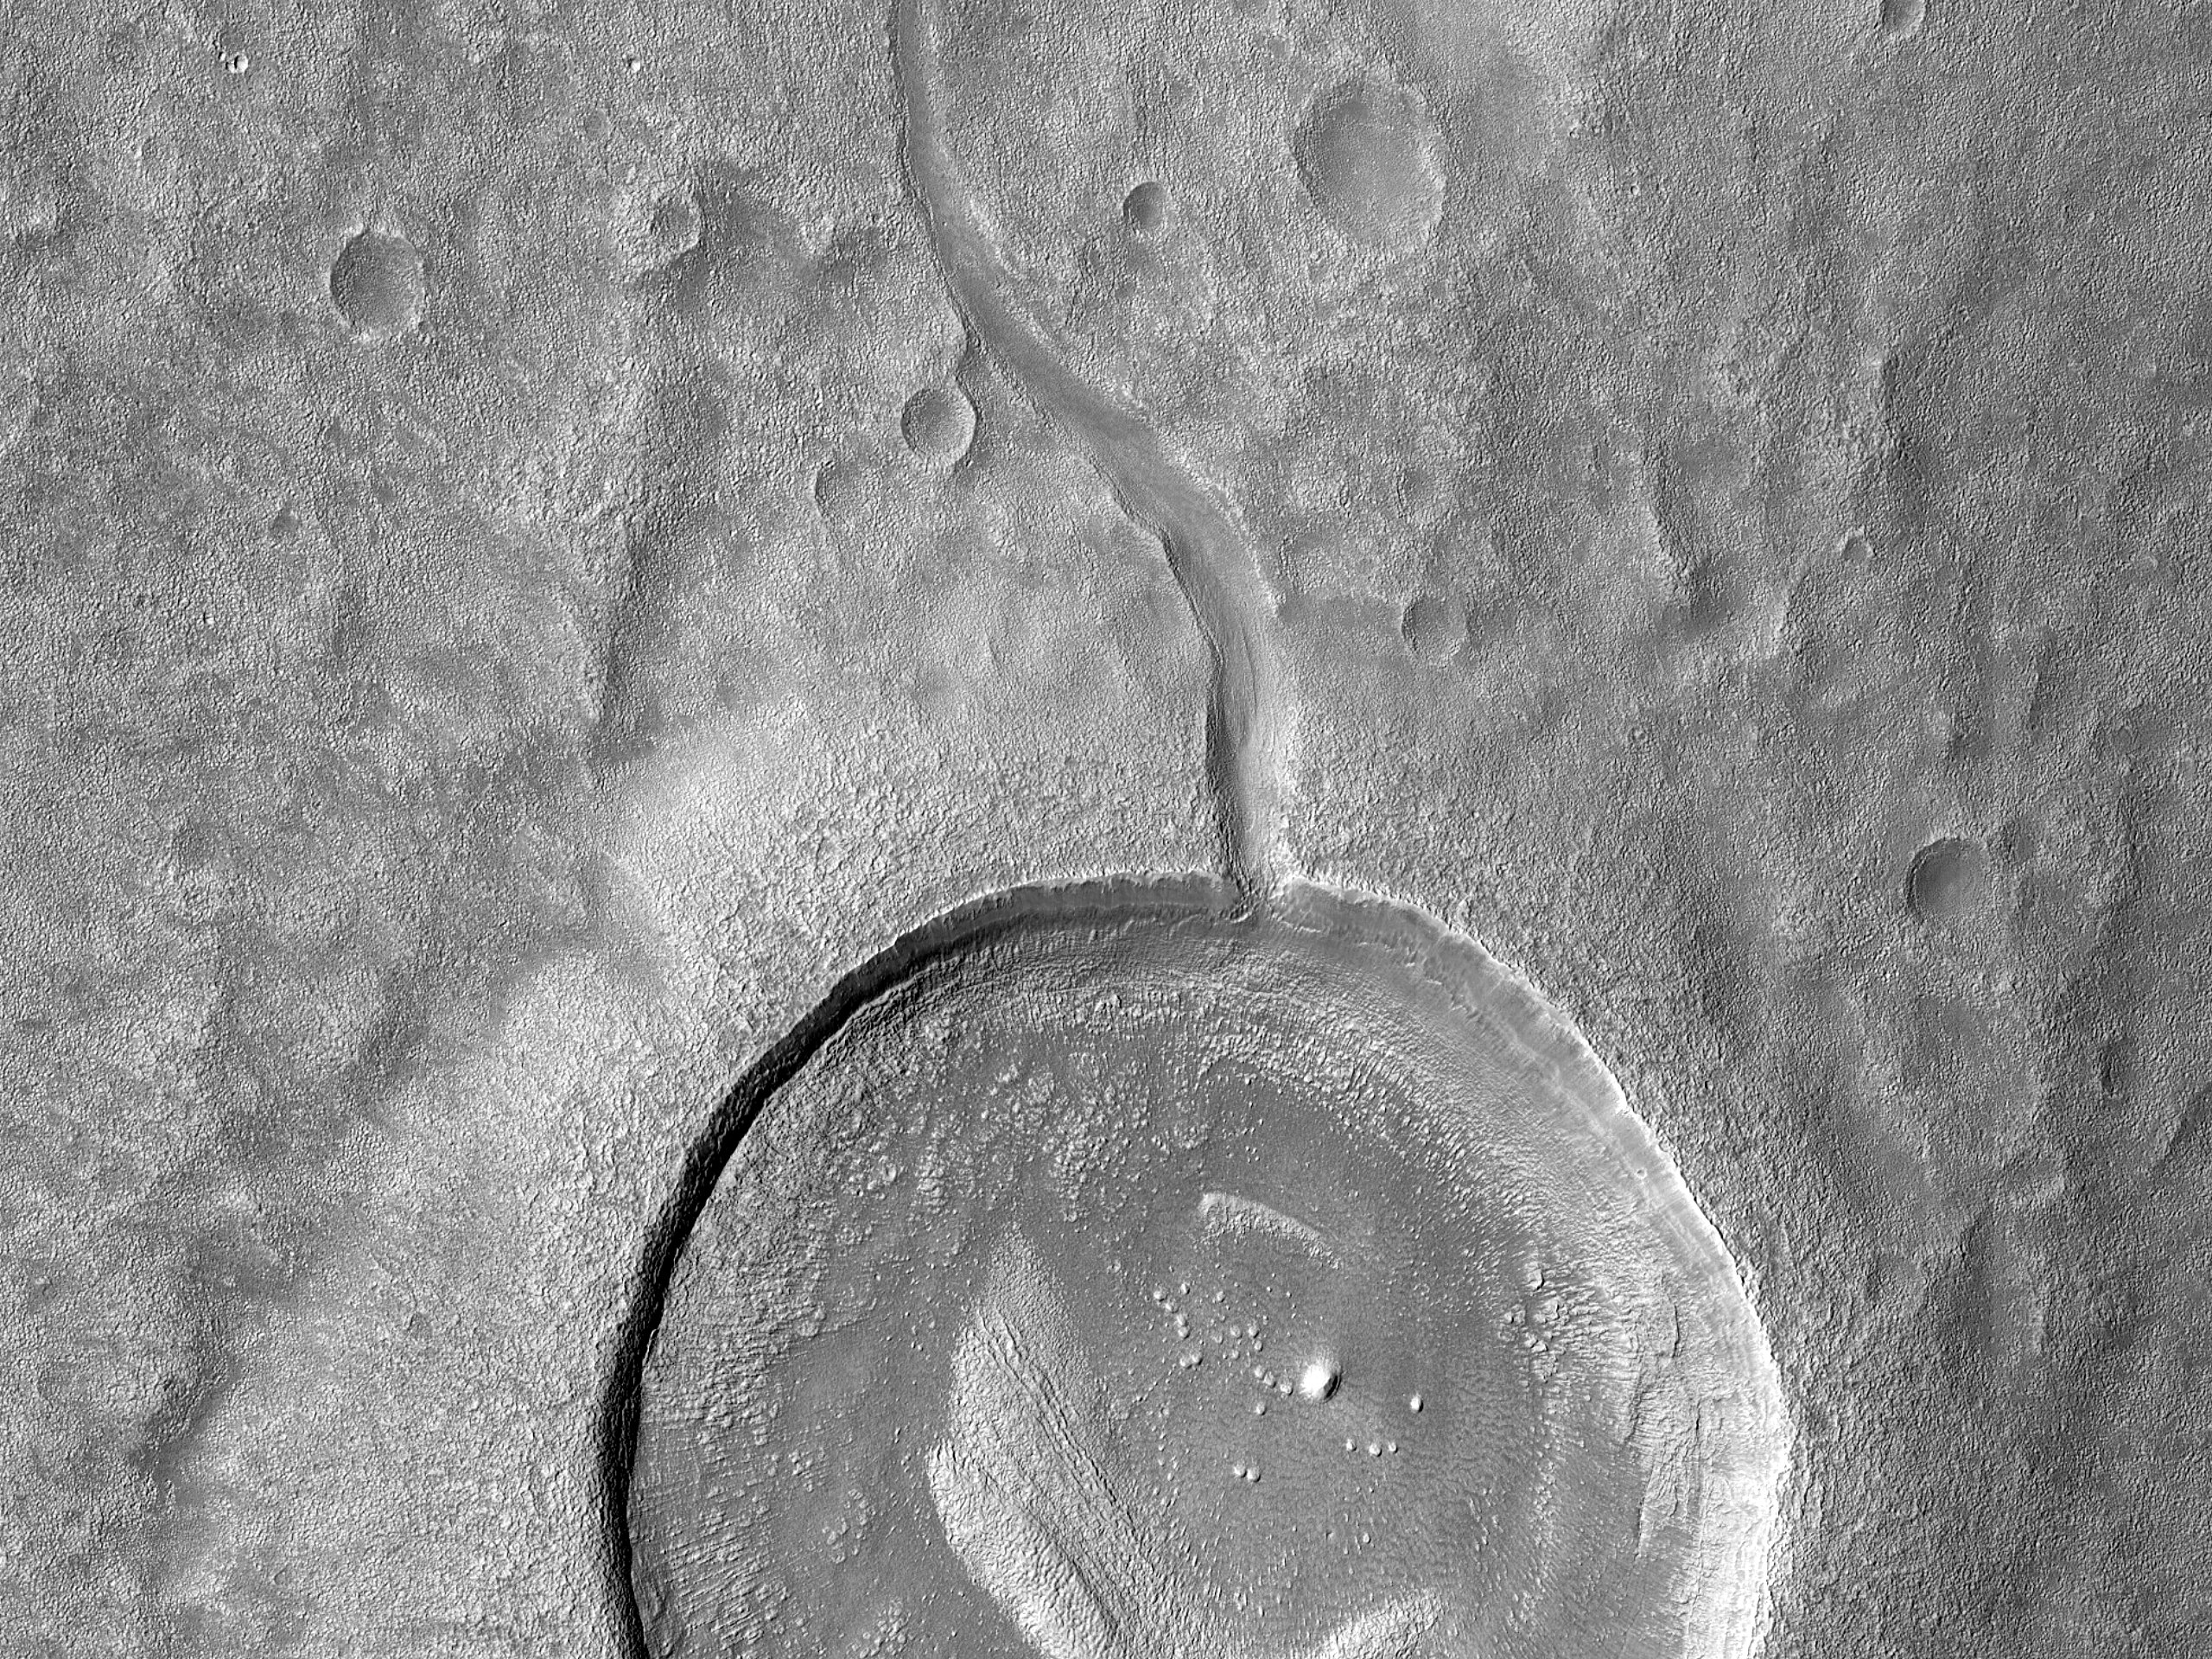 Brecha de saída de uma cratera bem preservada